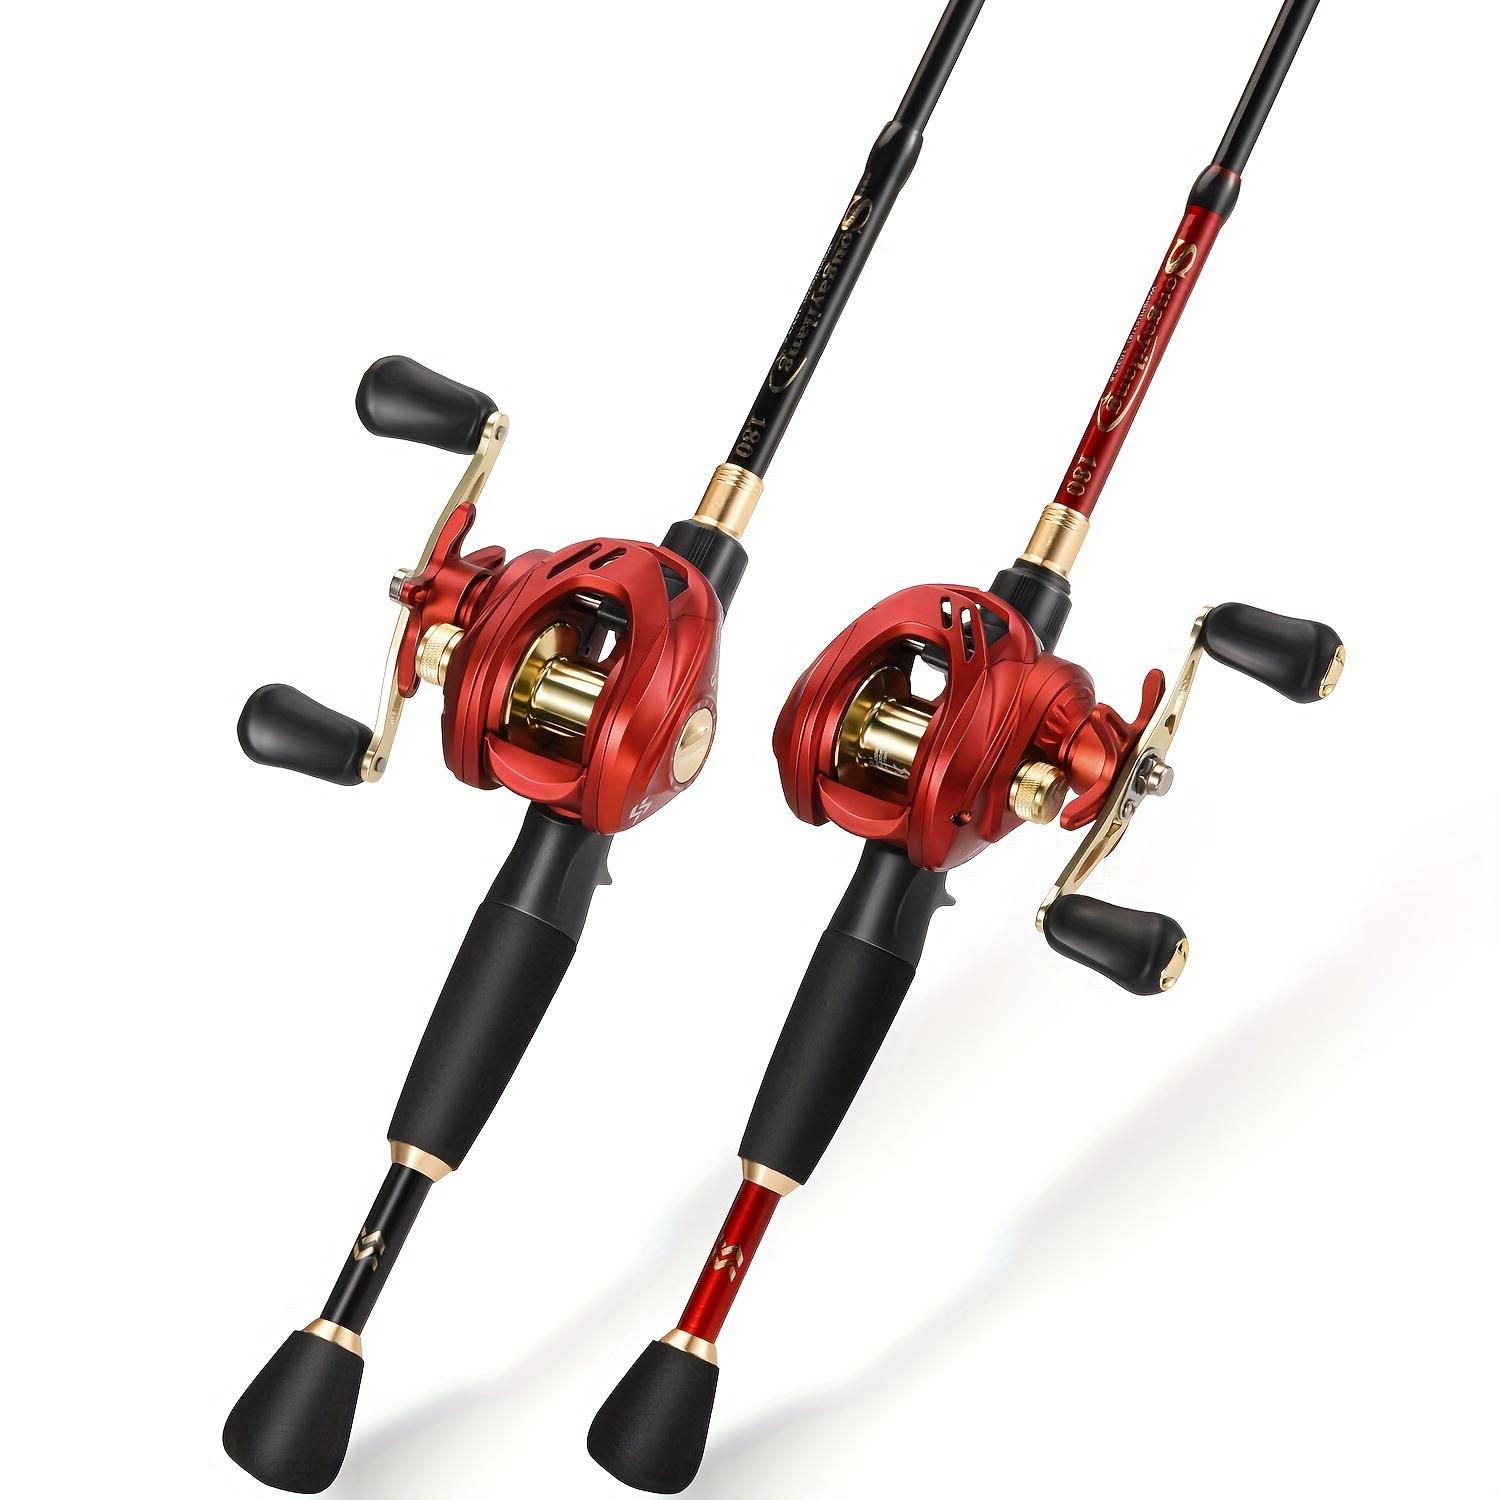 Fishing Rod Telescopic Fishing Pole Black Fishing Rod and Reel Baitcast  Combo Lightweight Design Compact Stable Fishing Rod and Reel